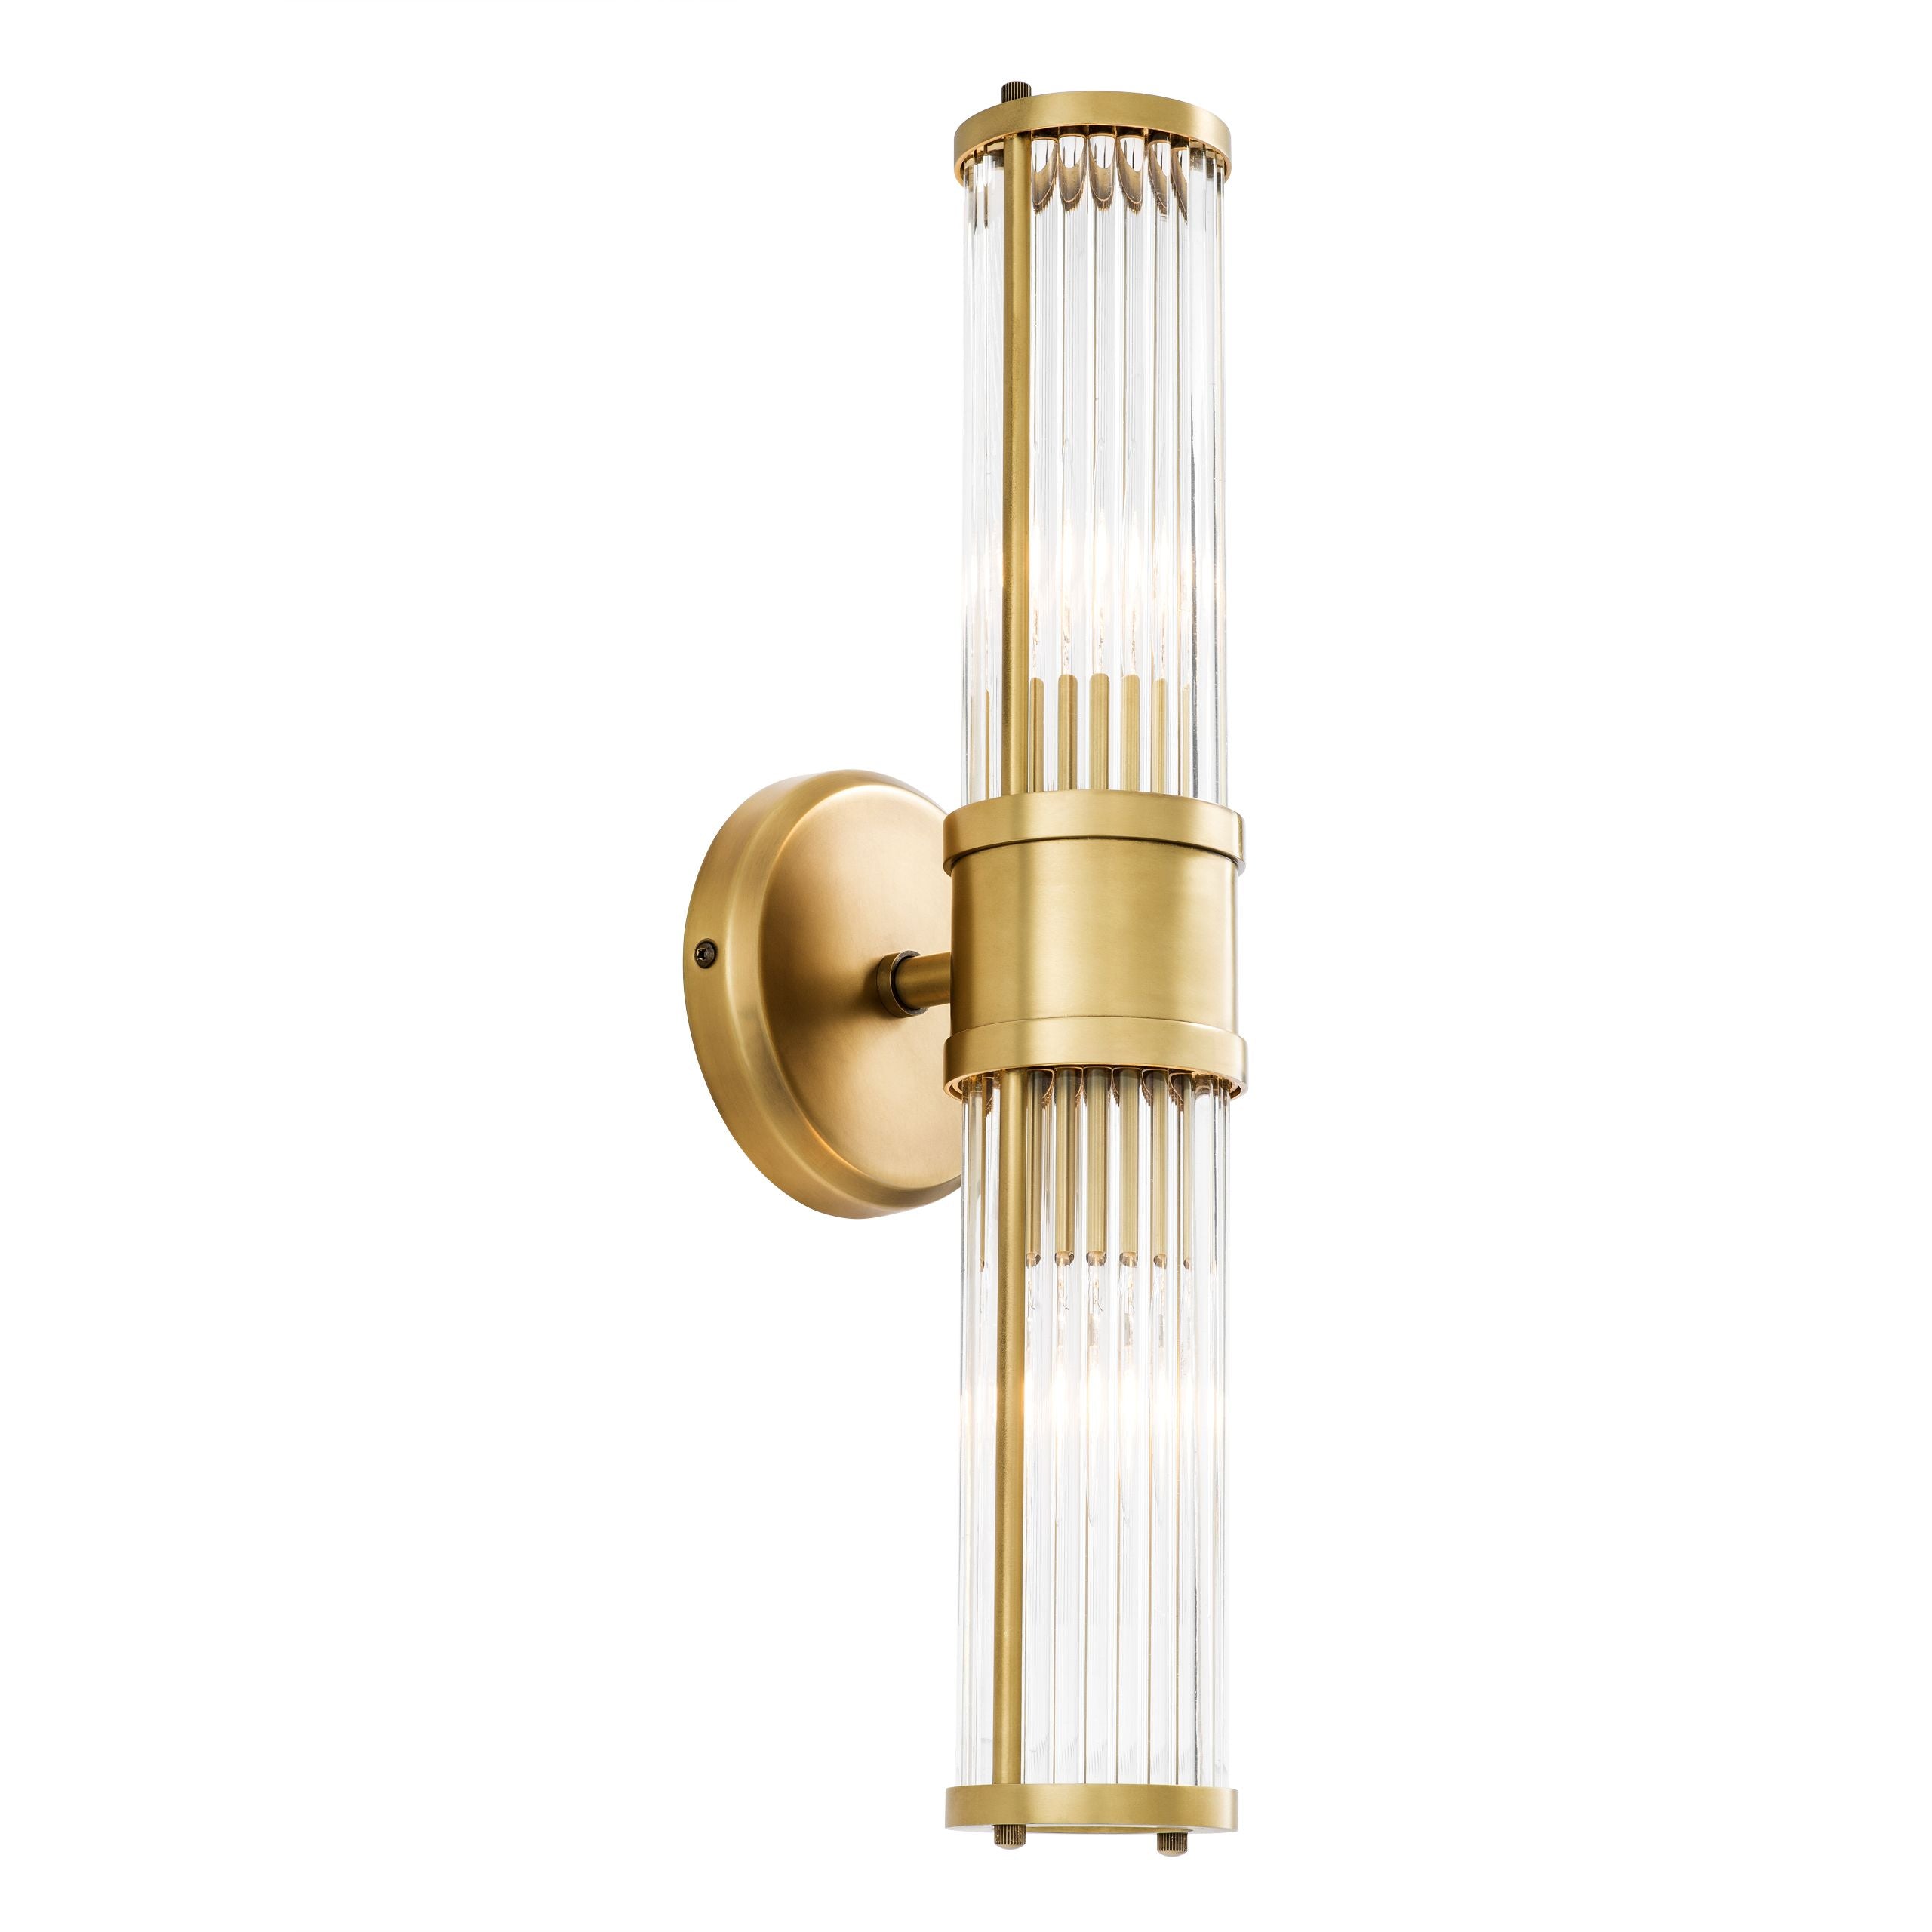 Claridges Wall Lamps[Single/Double] - [Brass/Nickel] - Eichholtz - Luxury Lighting Boutique